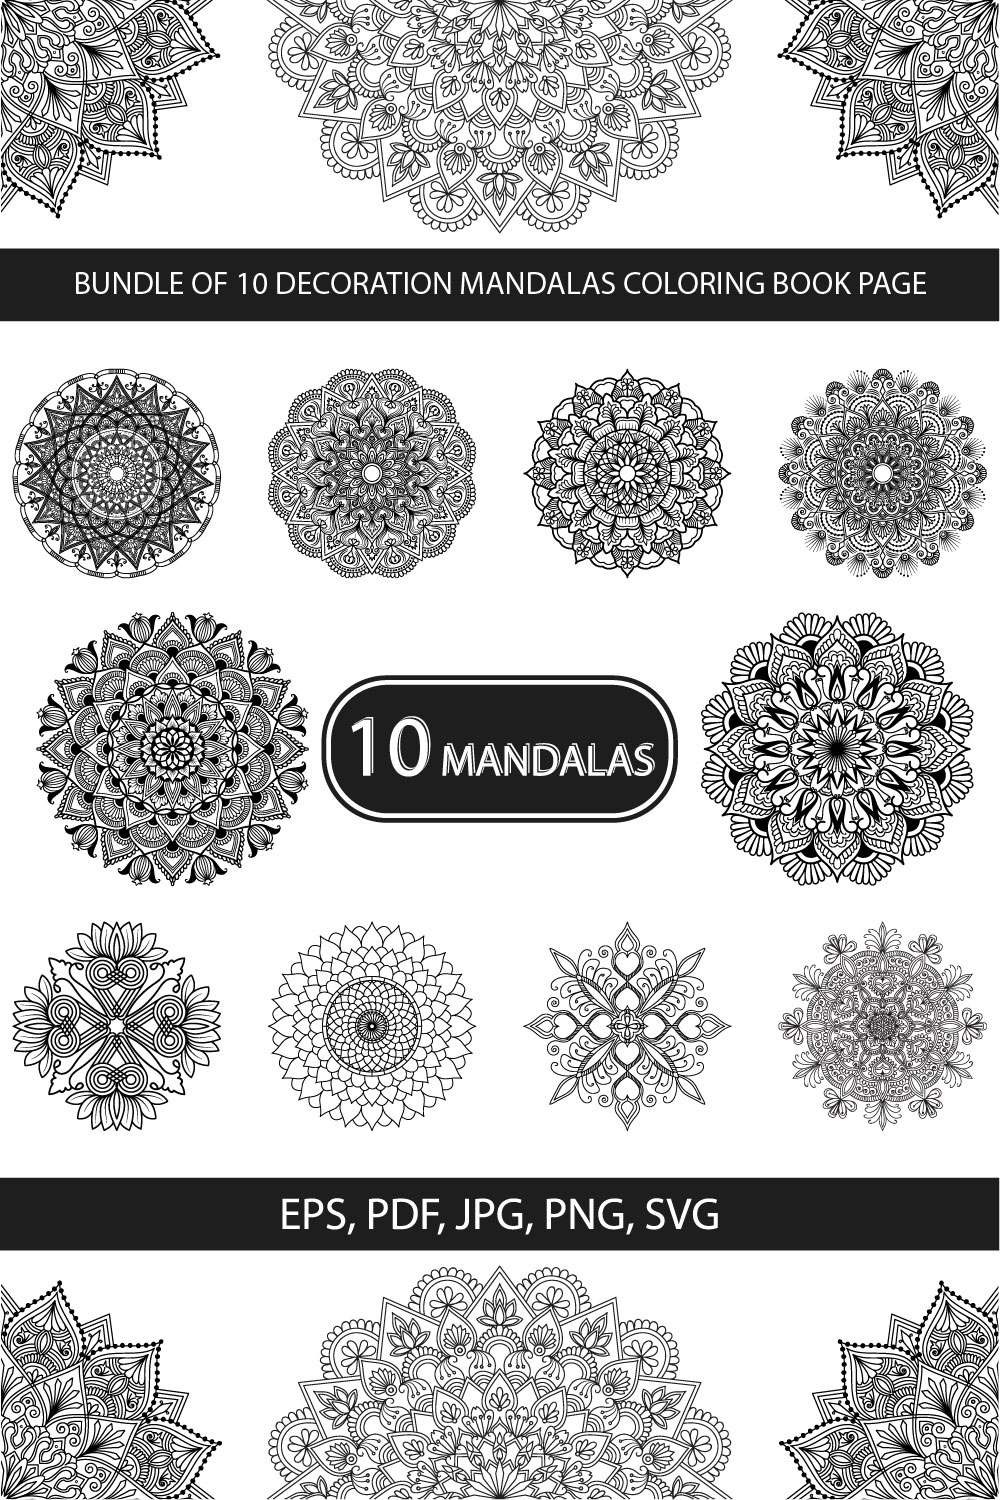 Bundle of 10 Decoration Mandalas Coloring Book Page pinterest preview image.